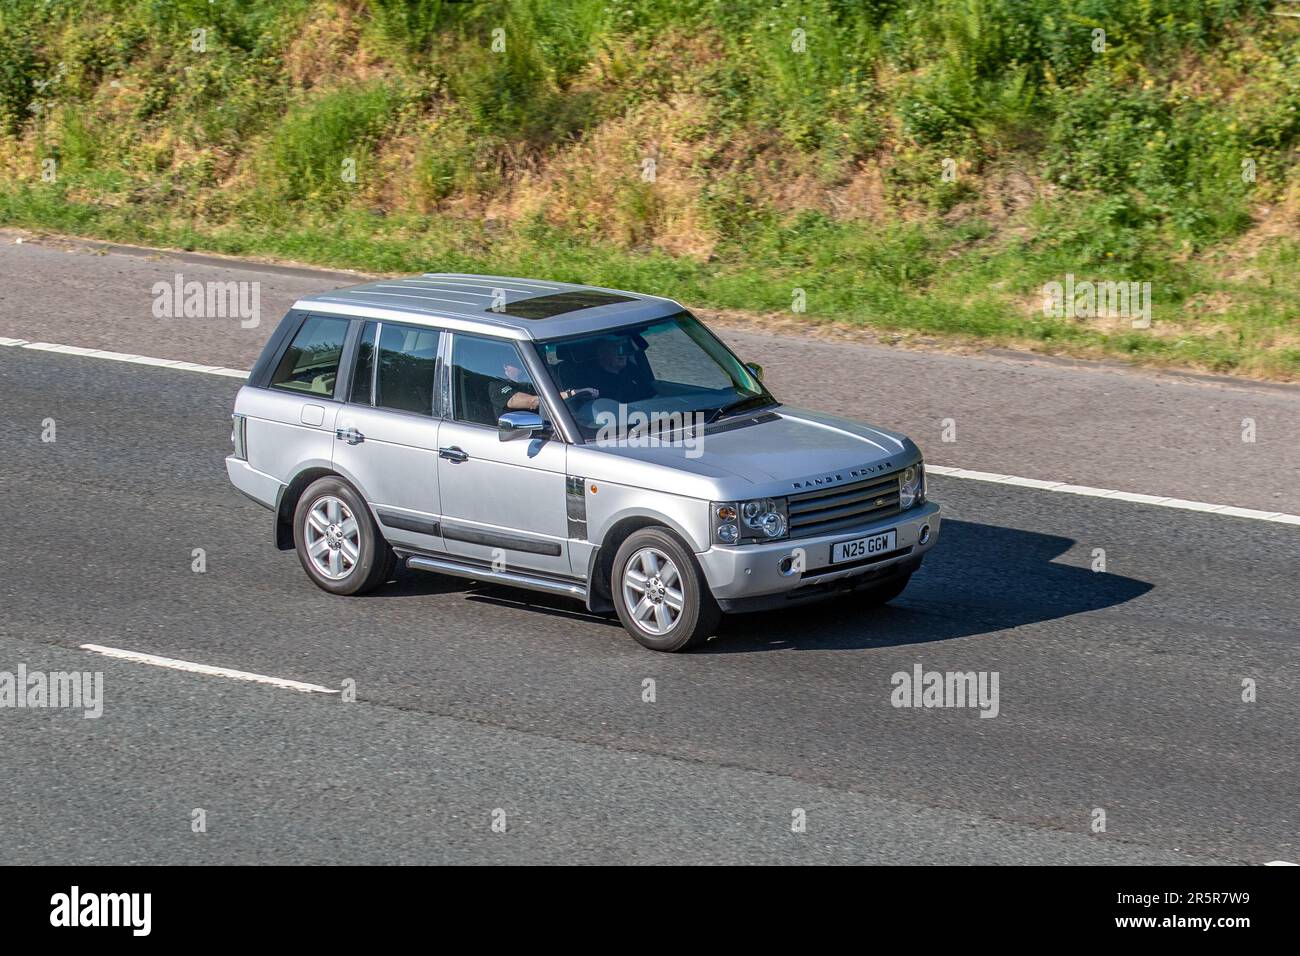 2004 Silver Land Rover Range Rover Vogue V8 Auto, V8 Auto SUV Benzinmotor 4398 ccm; Fahrt auf der Autobahn M61. Stockfoto